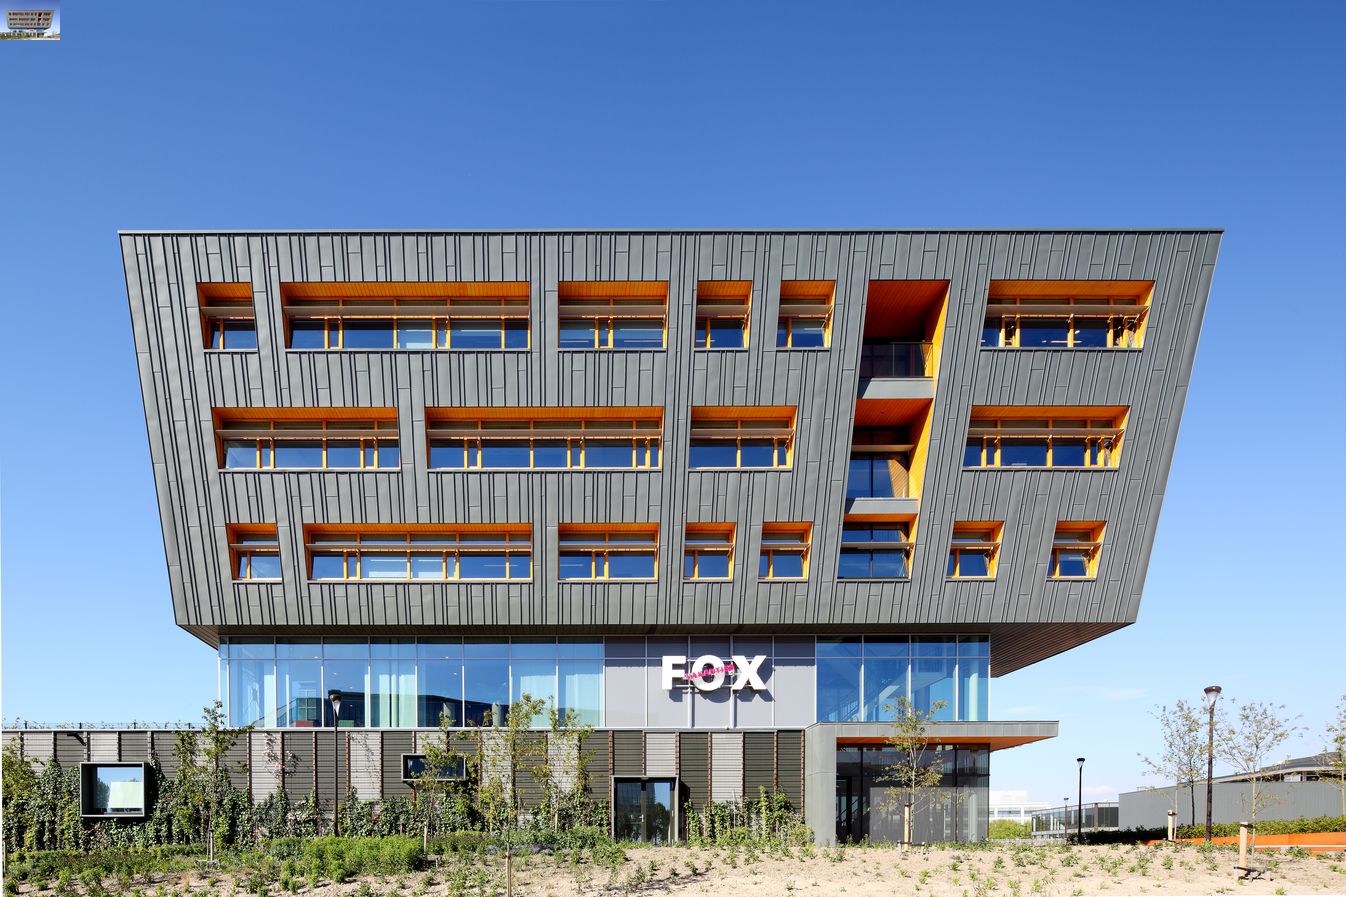 FOX Vakanties, Netherlands, C2C certified, facade: RHEINZINK-prePATINA graphite-grey, angled-standing-seam